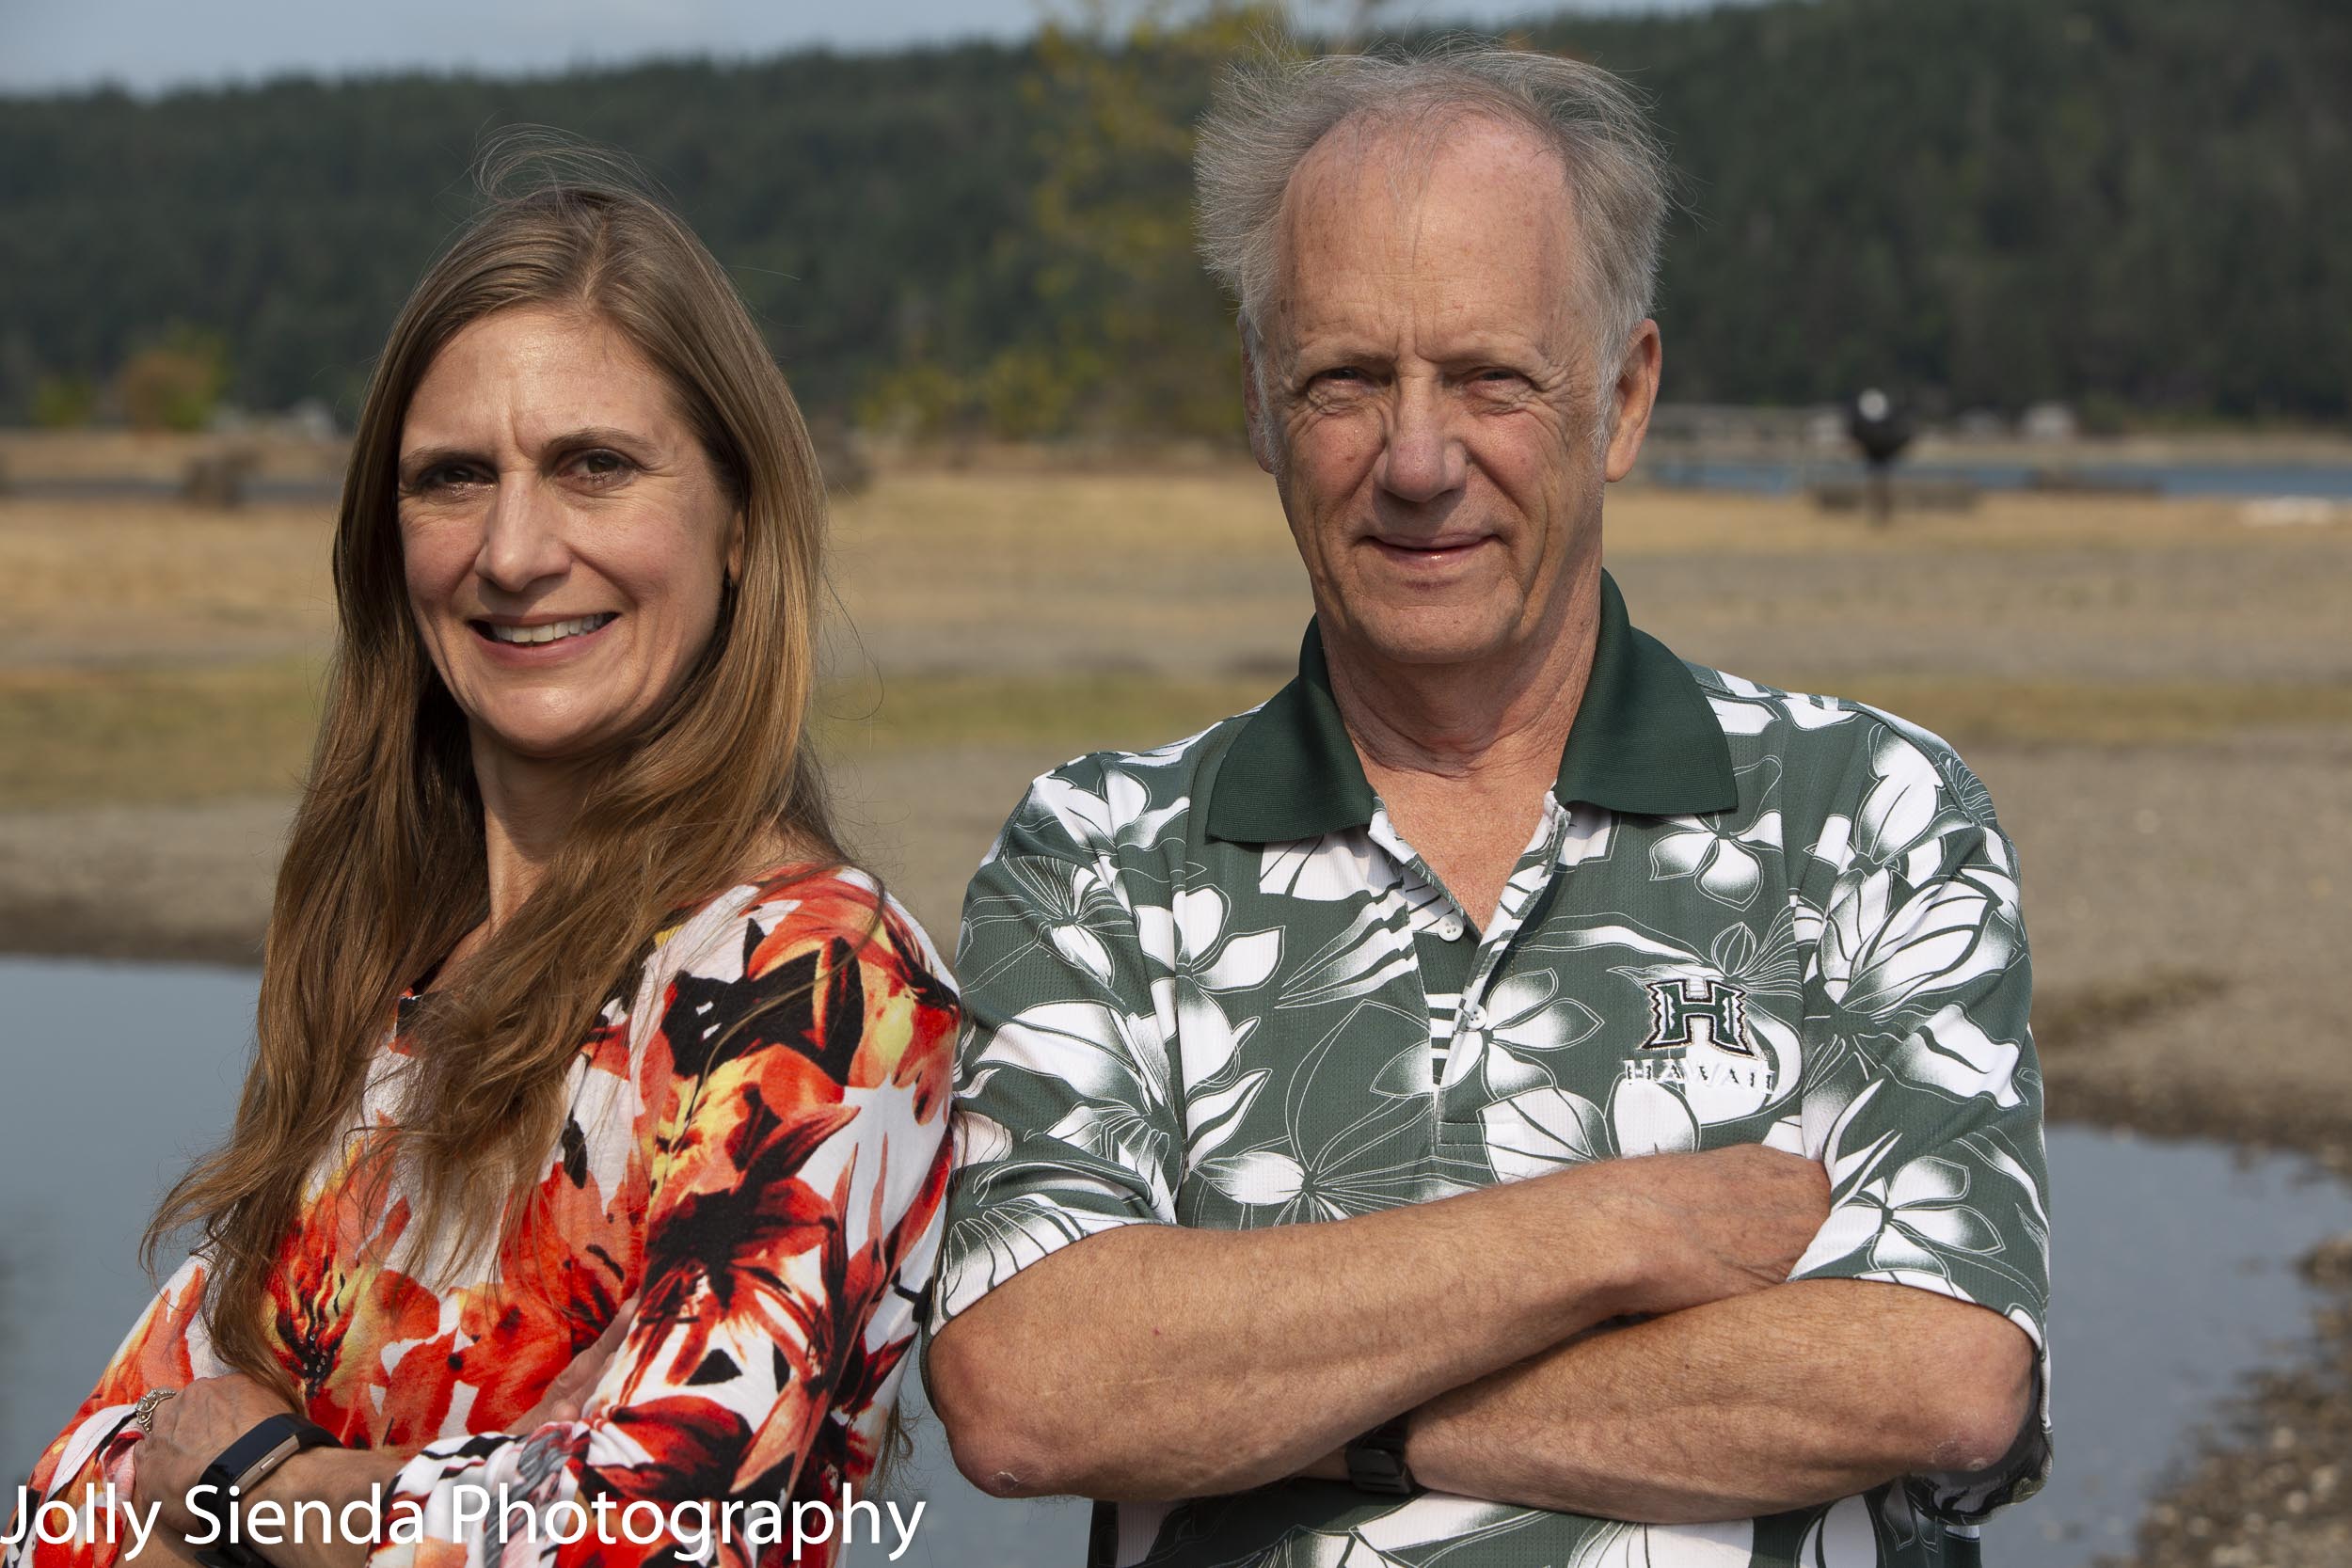 Cathy Darlington Graham and Ron Jenson, Business portrait photog